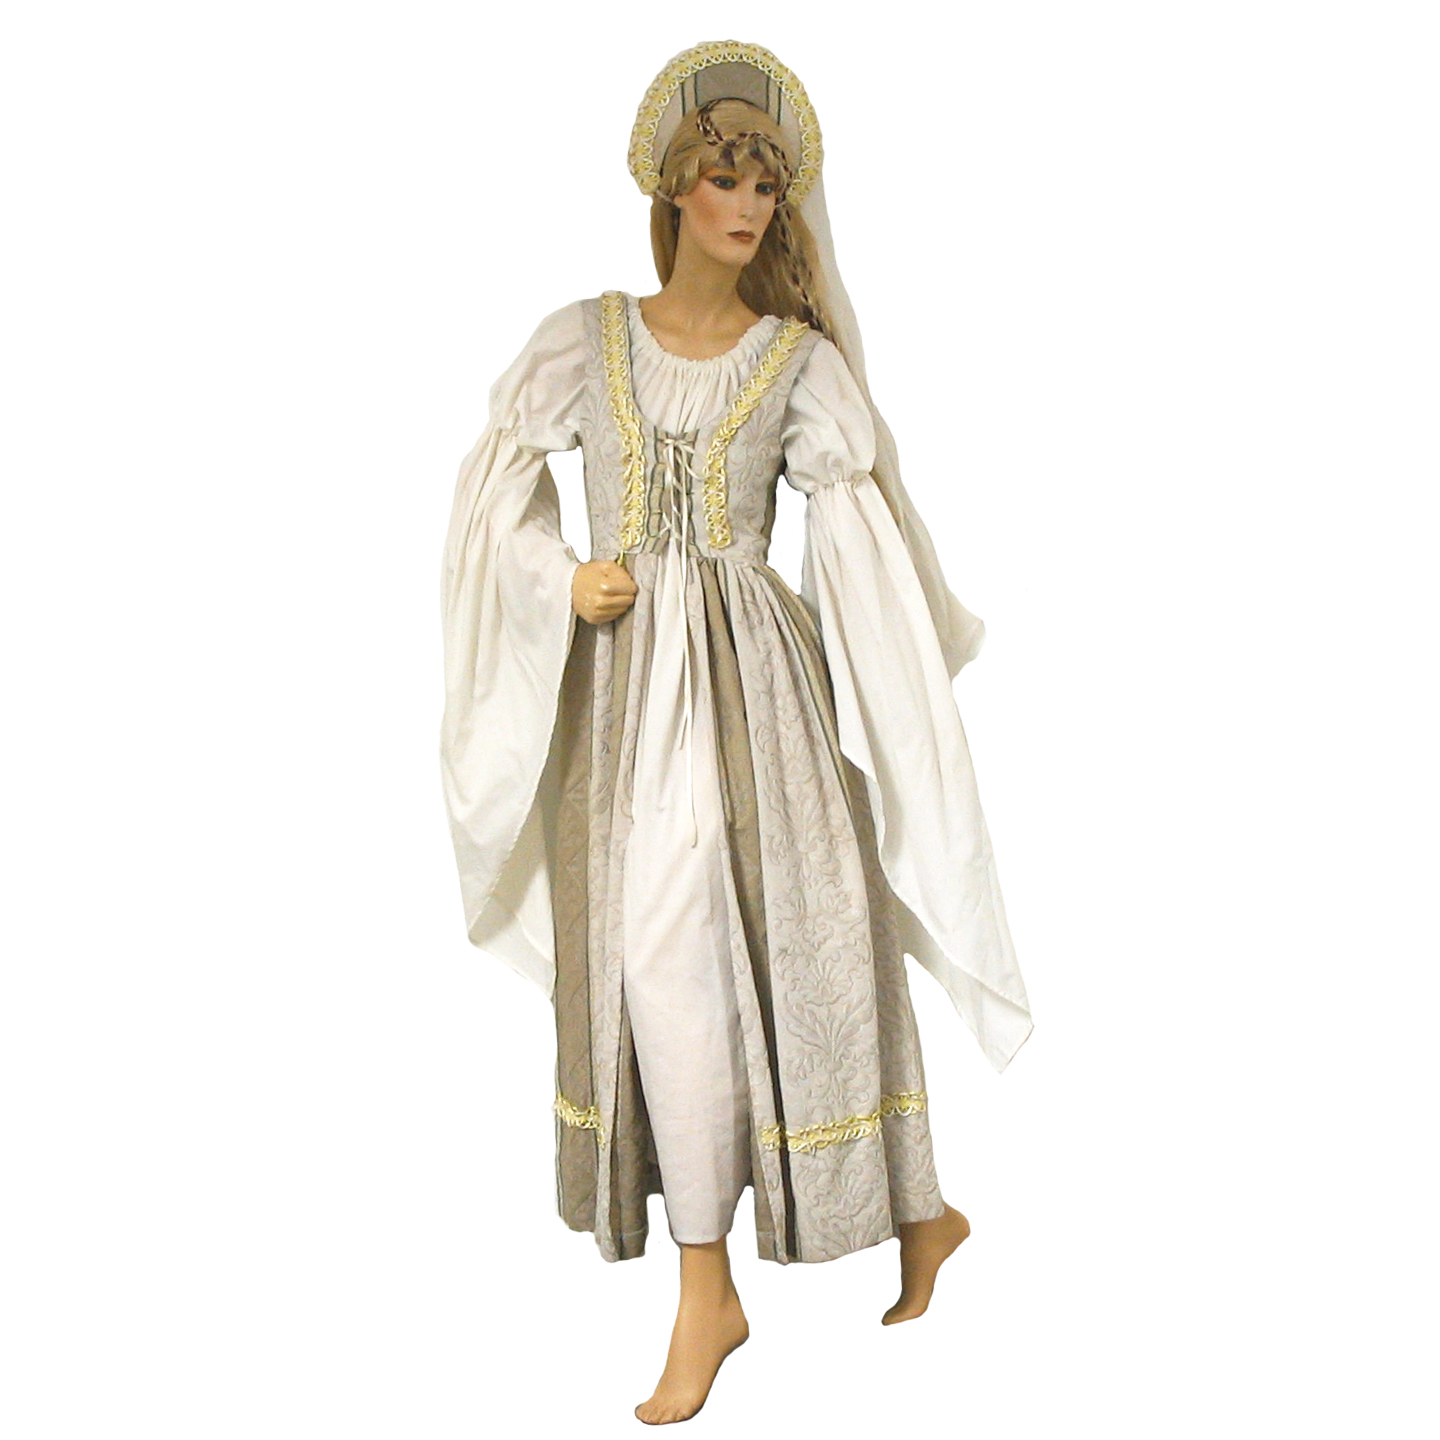 Renaissance Princess Costume